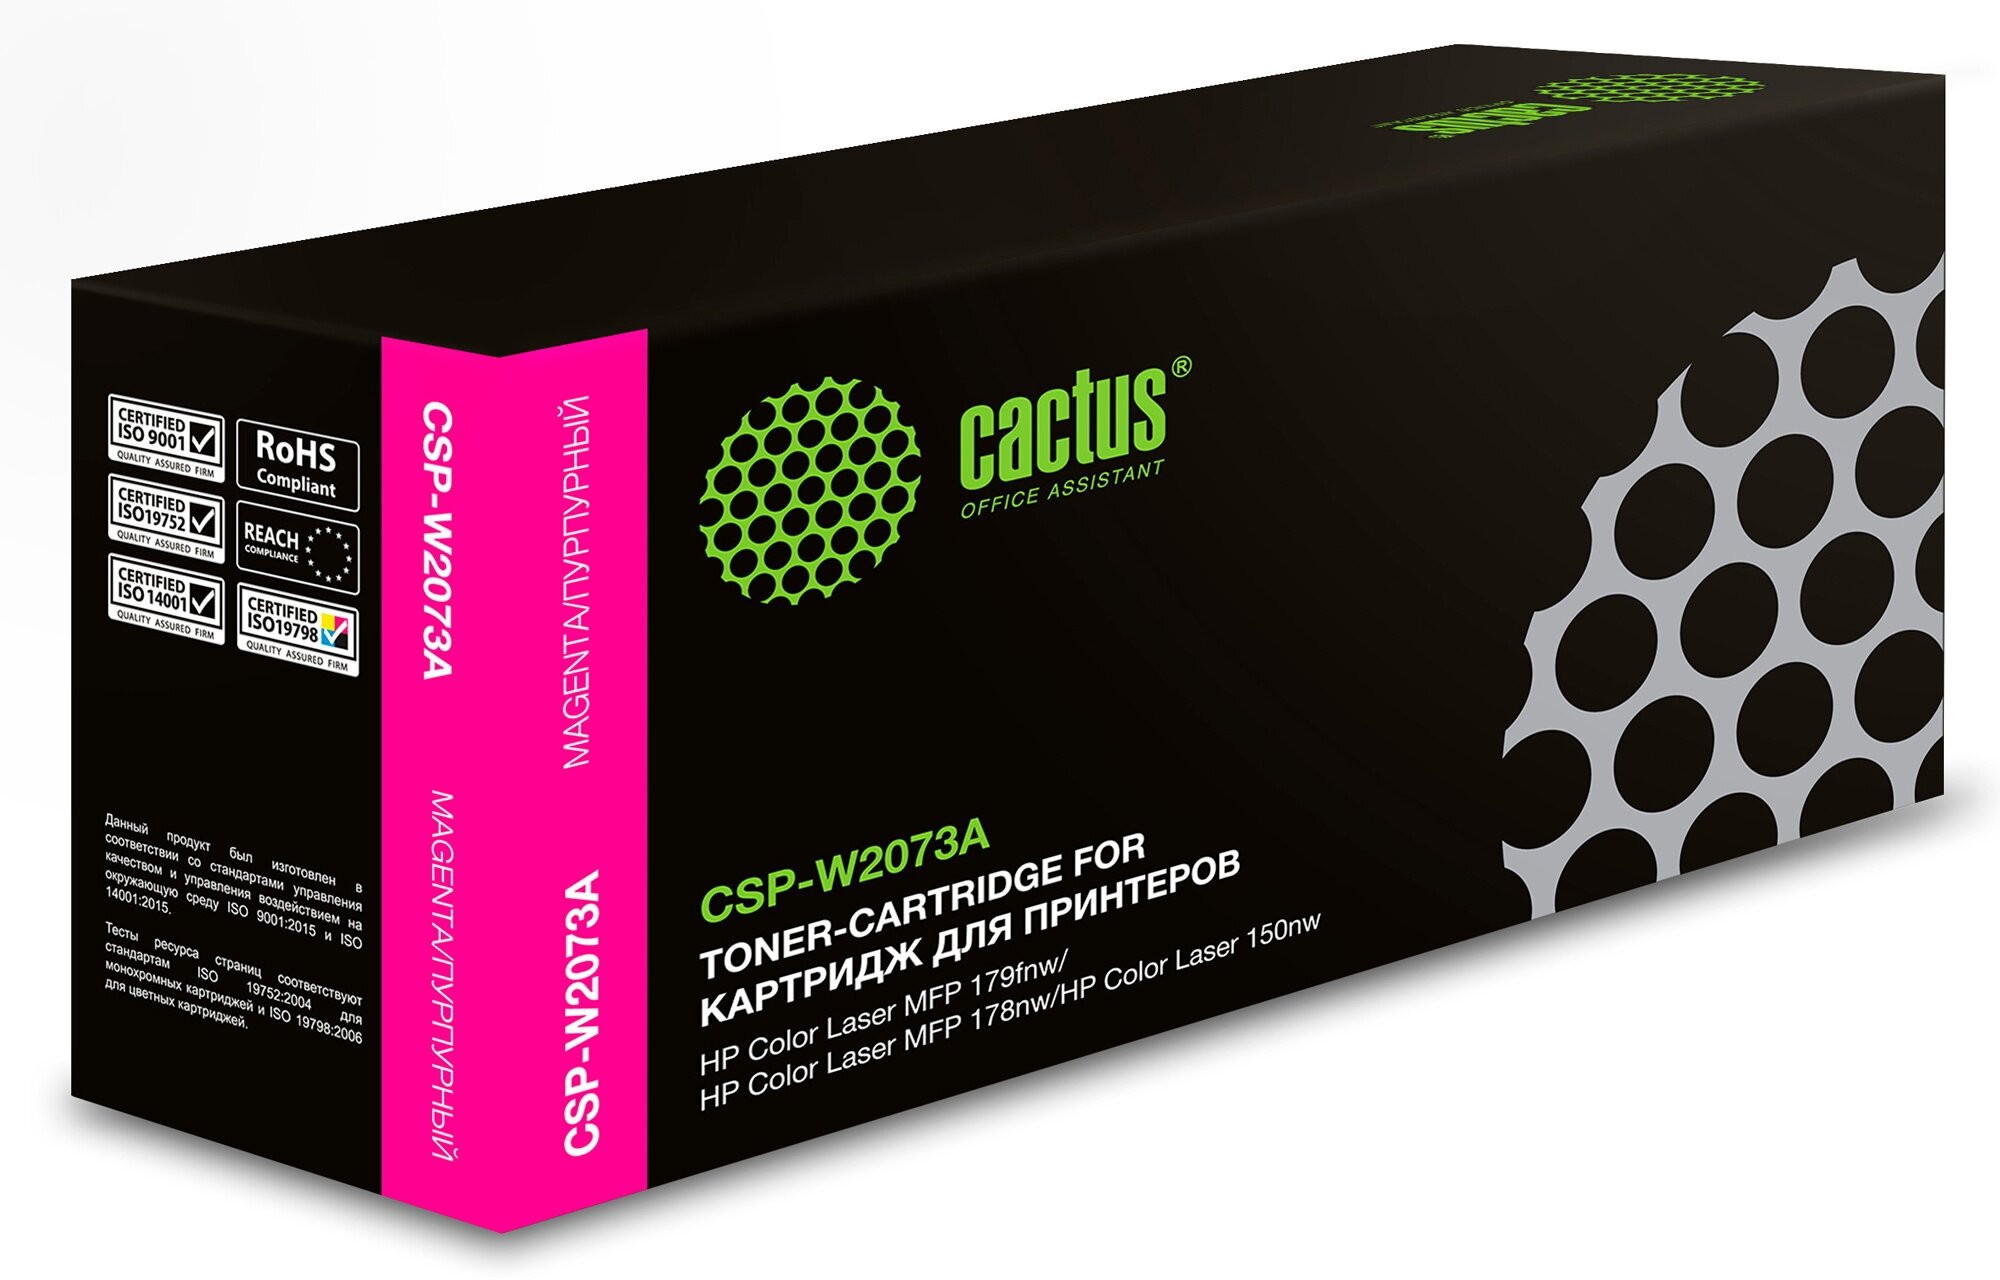 Картридж лазерный Cactus CSP-W2073A пурпурный 700стр. для HP Color Laser 150a150nw178nw MFP179fnw MF